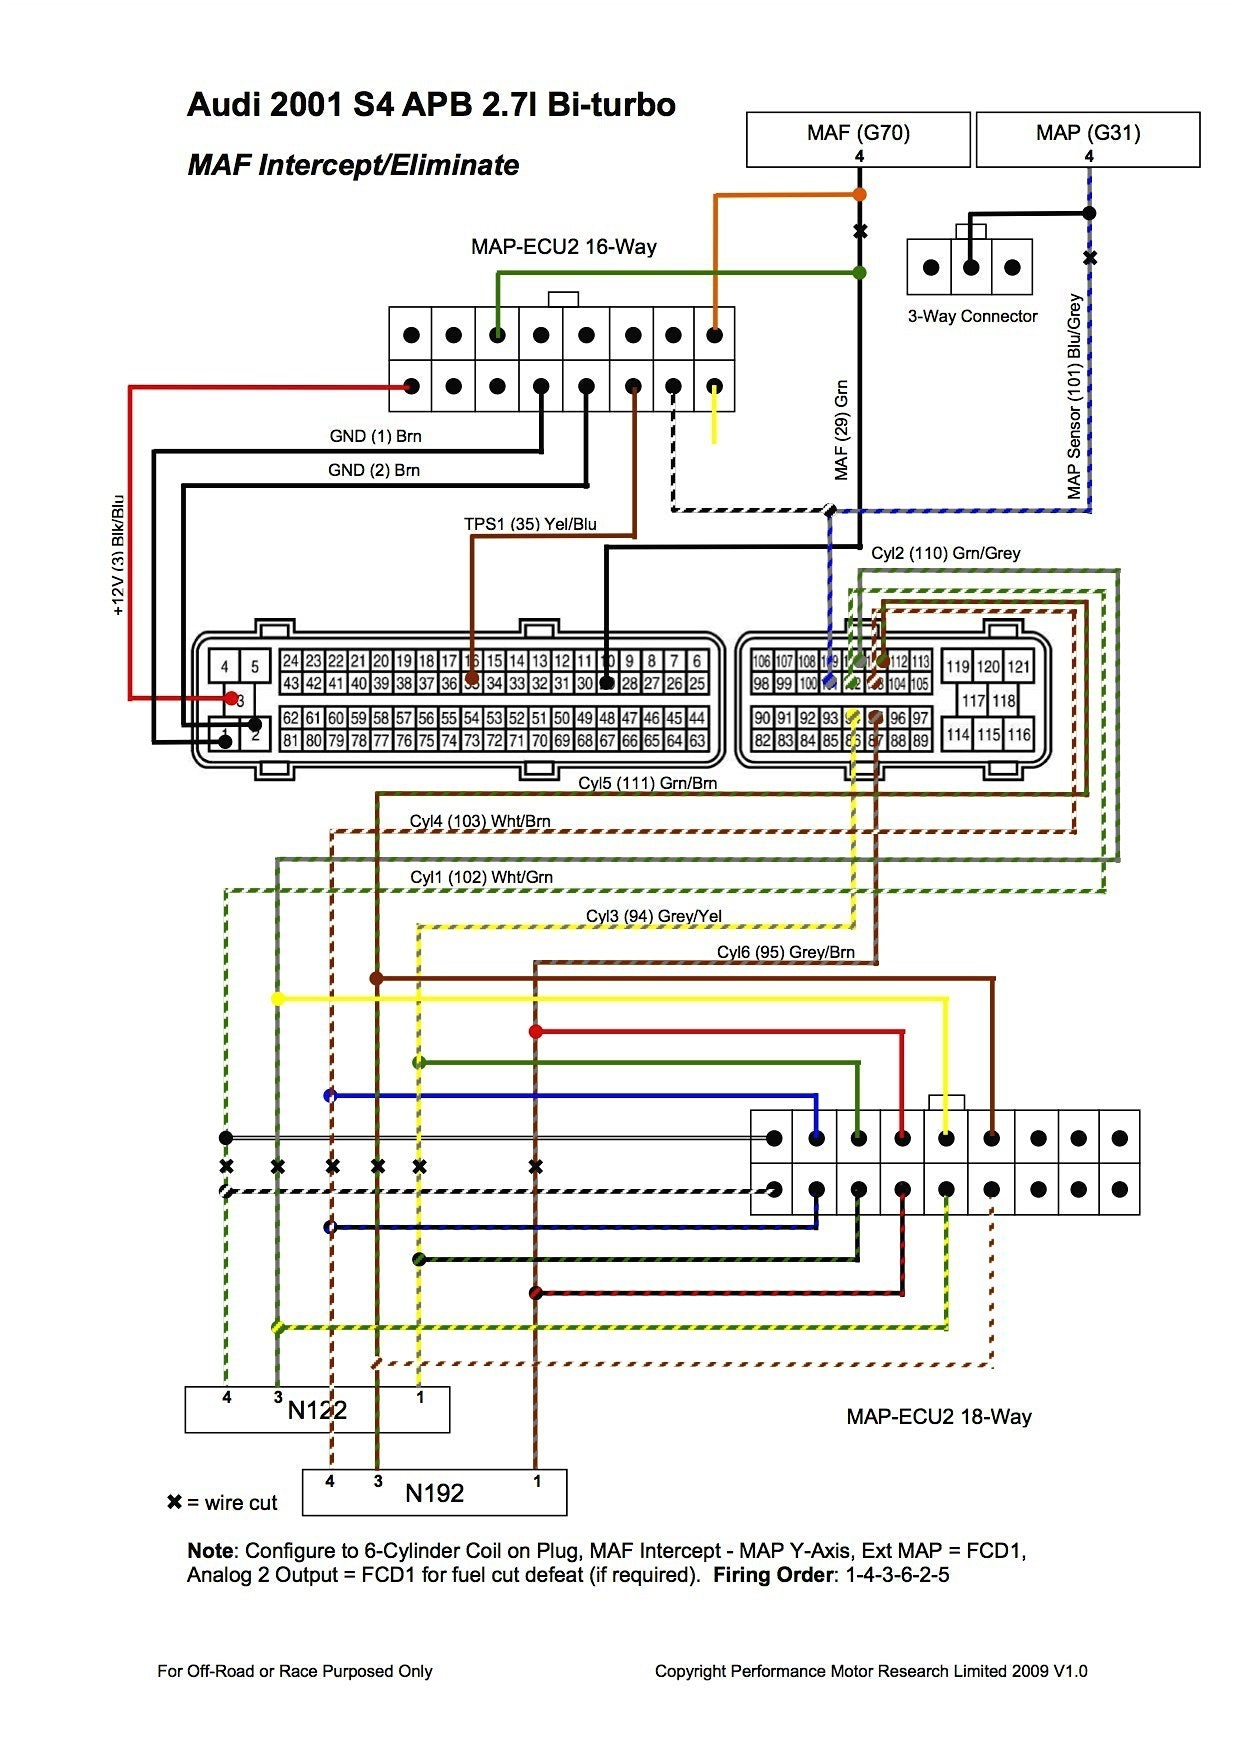 vw golf 4 wiring diagram pdf inspirationa radio wiring diagram 2001 kia sportage valid 2002 vw golf stereo of vw golf 4 wiring diagram pdf in 2001 vw golf radio wiring diagram jpg